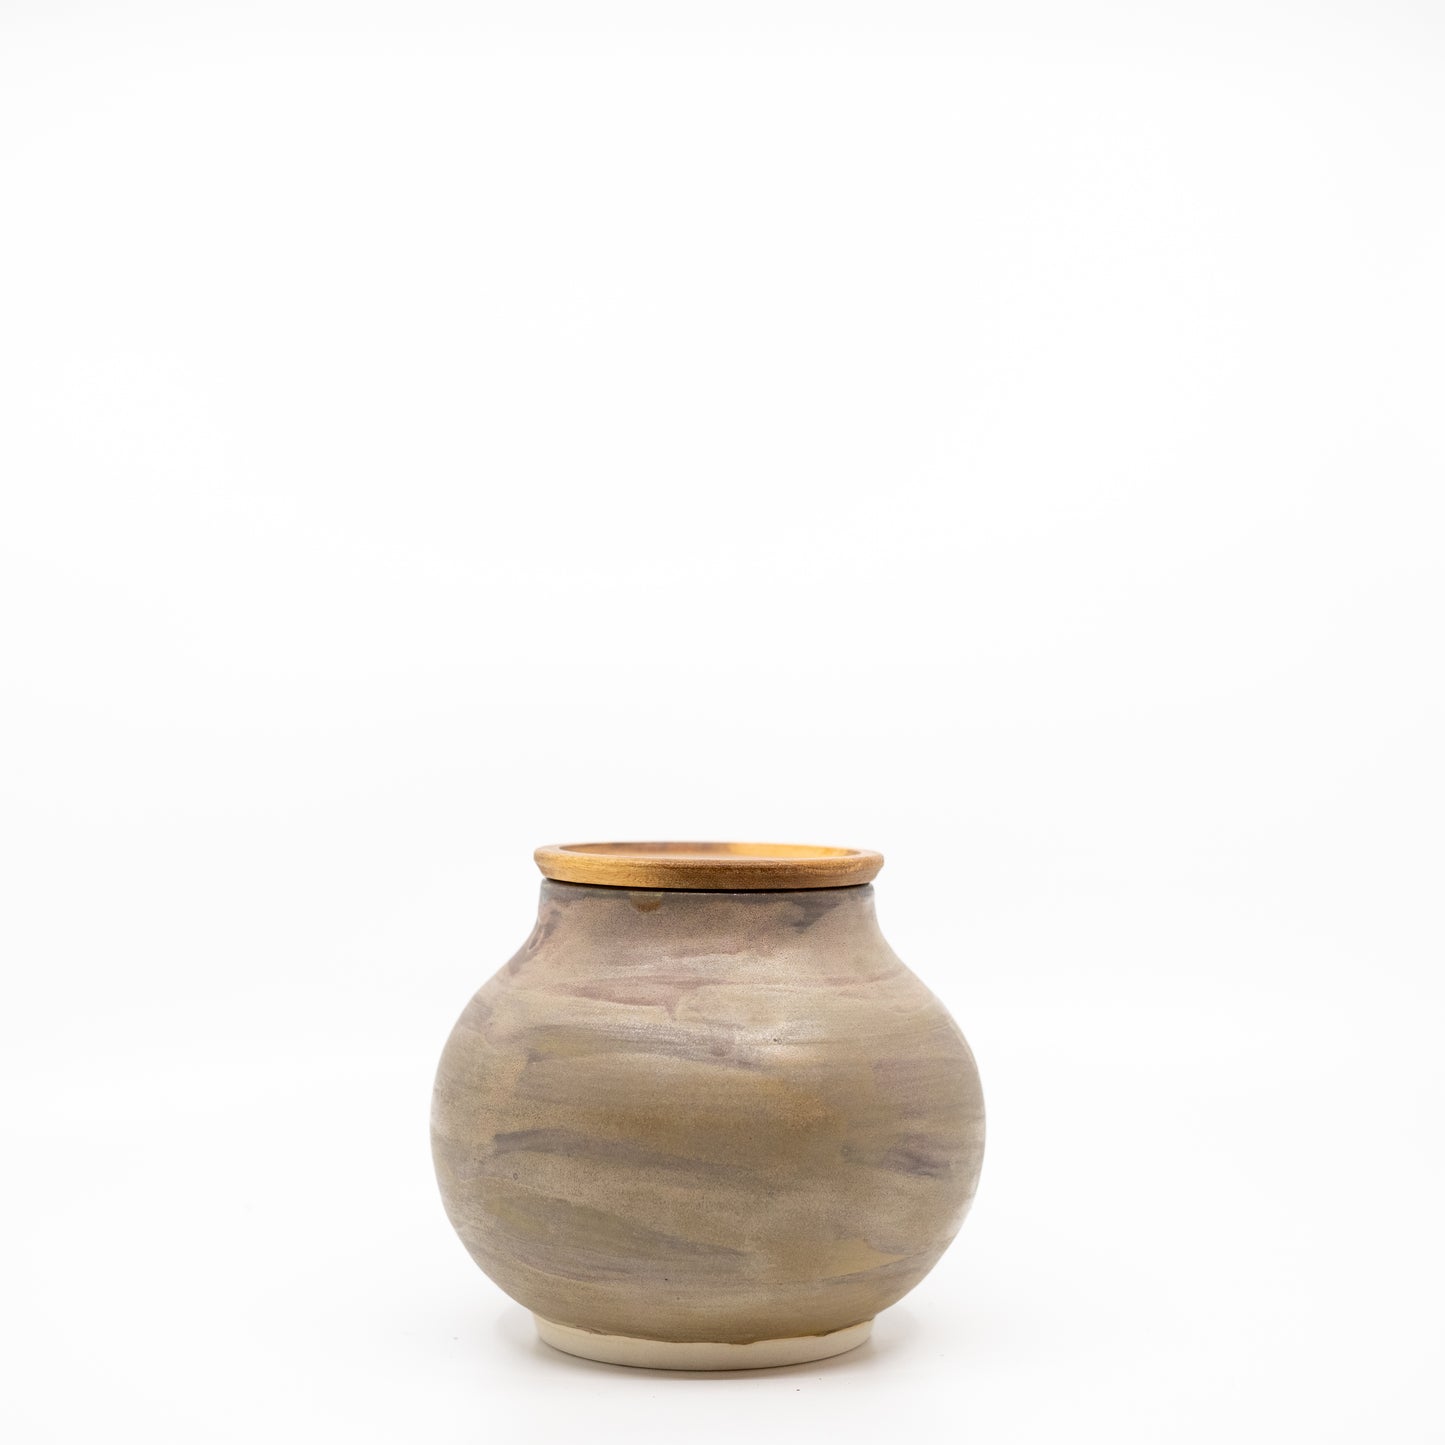 Wooden Lidded Tan Jar